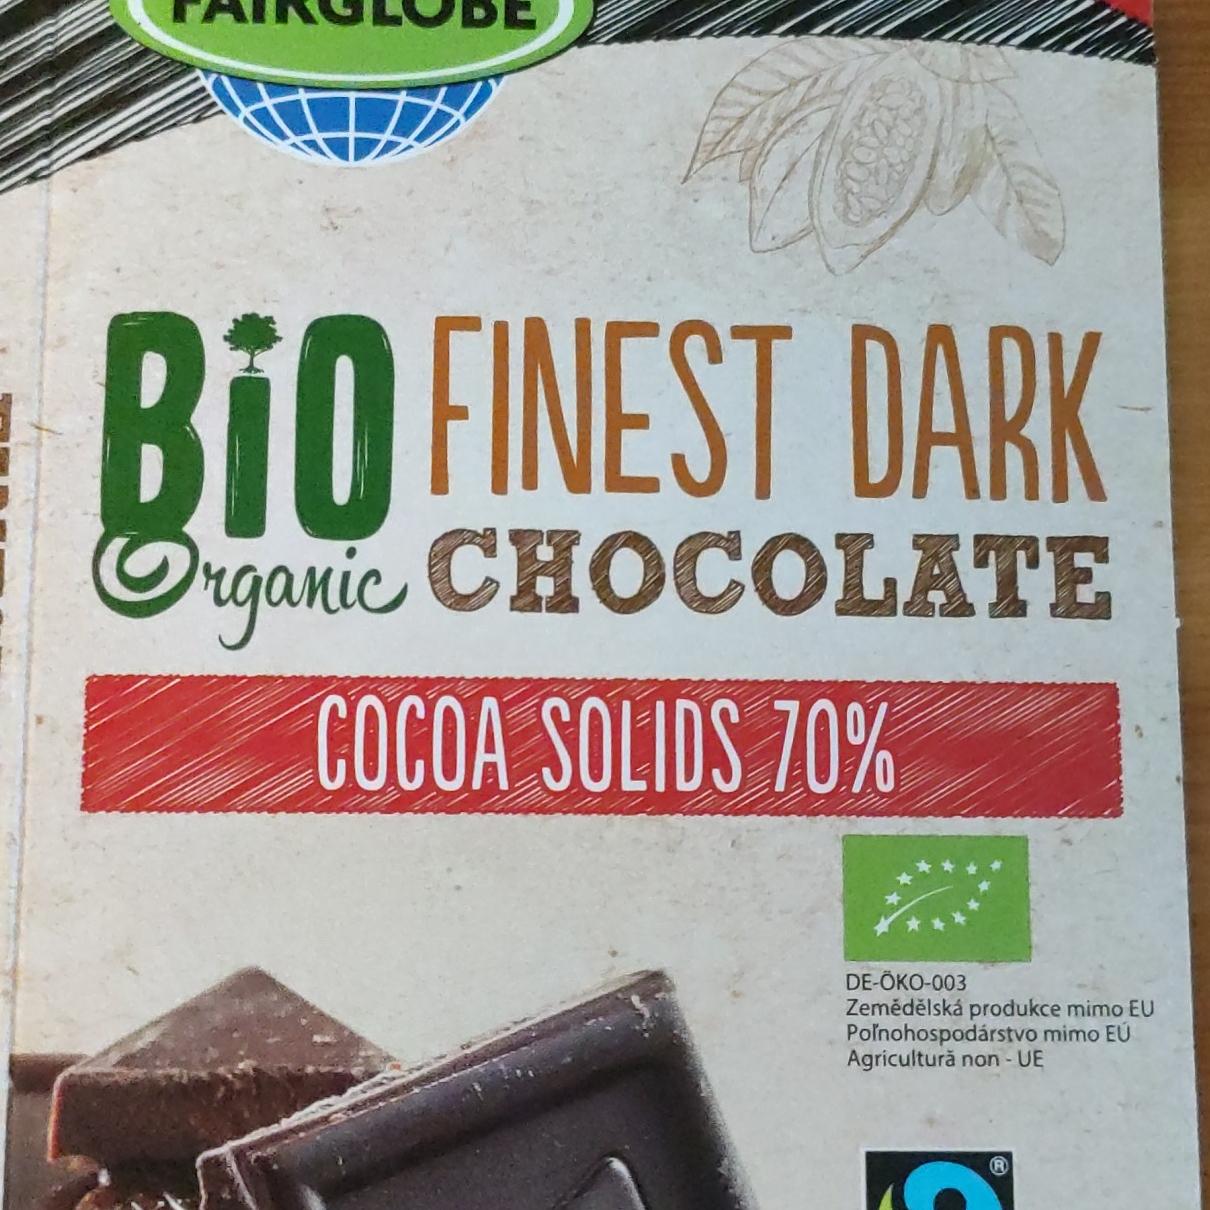 Фото - BIO Organic Dark Chocolate cocoa solids 70% Fairglobe